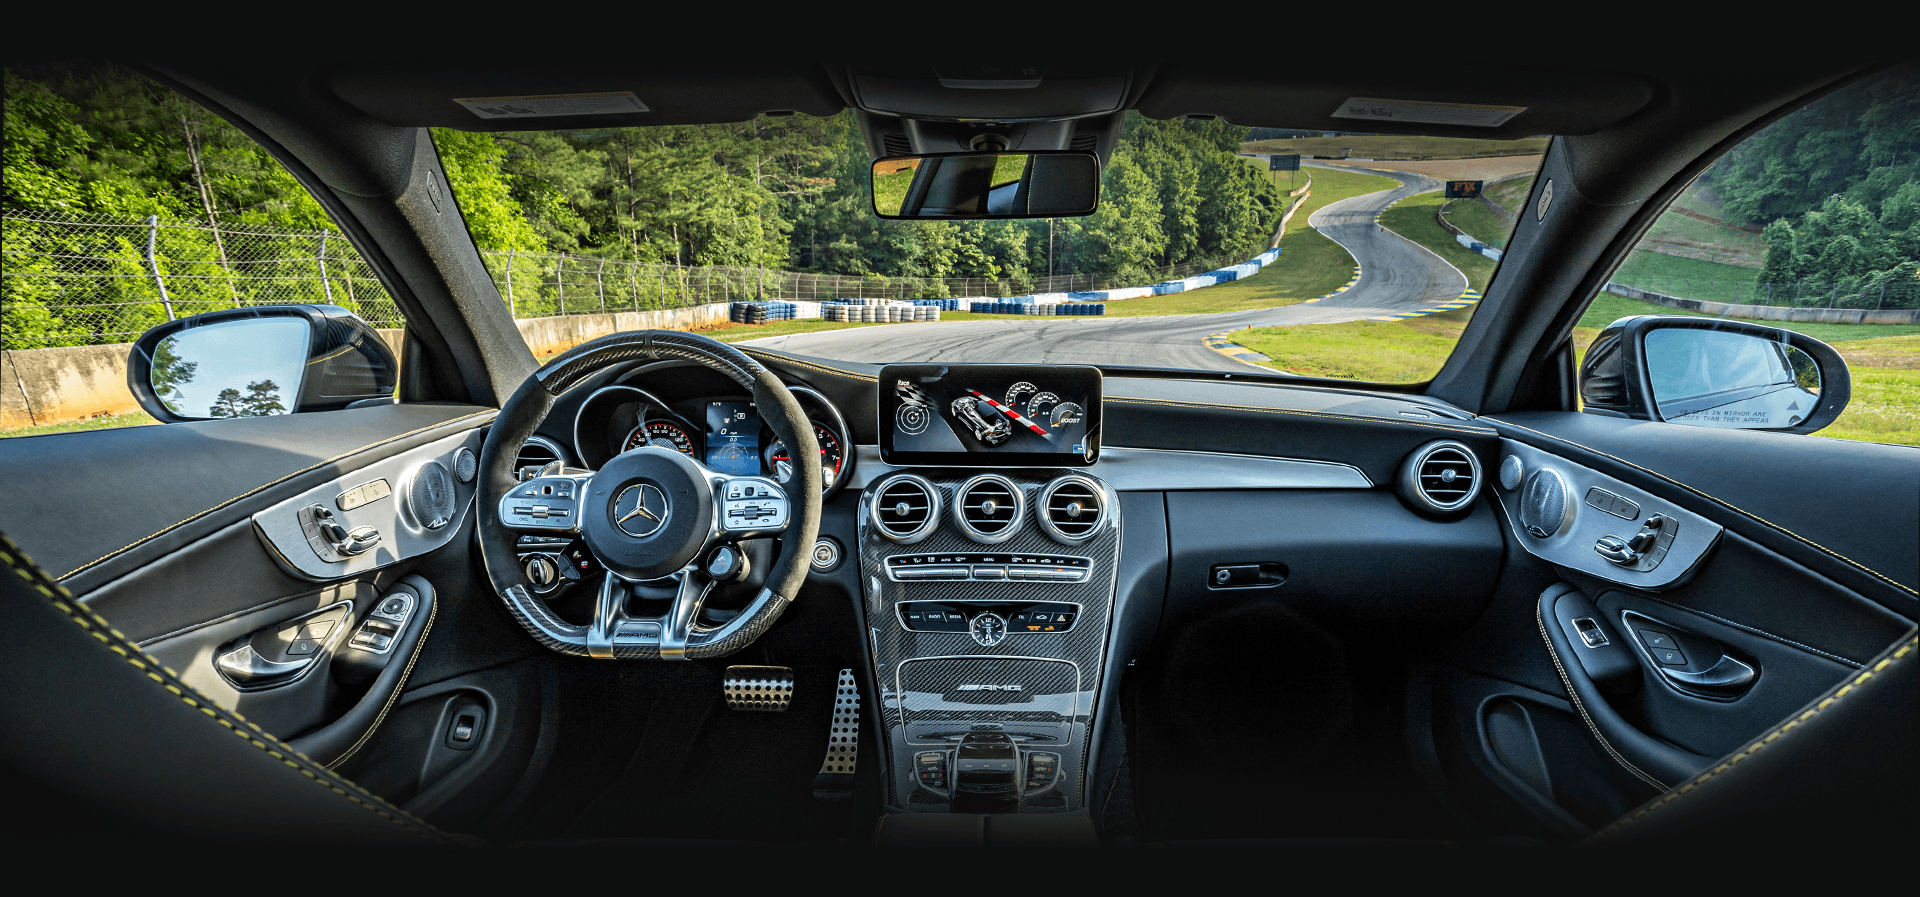 Digital cockpit of Mercedes-AMG vehicle overlooking race track